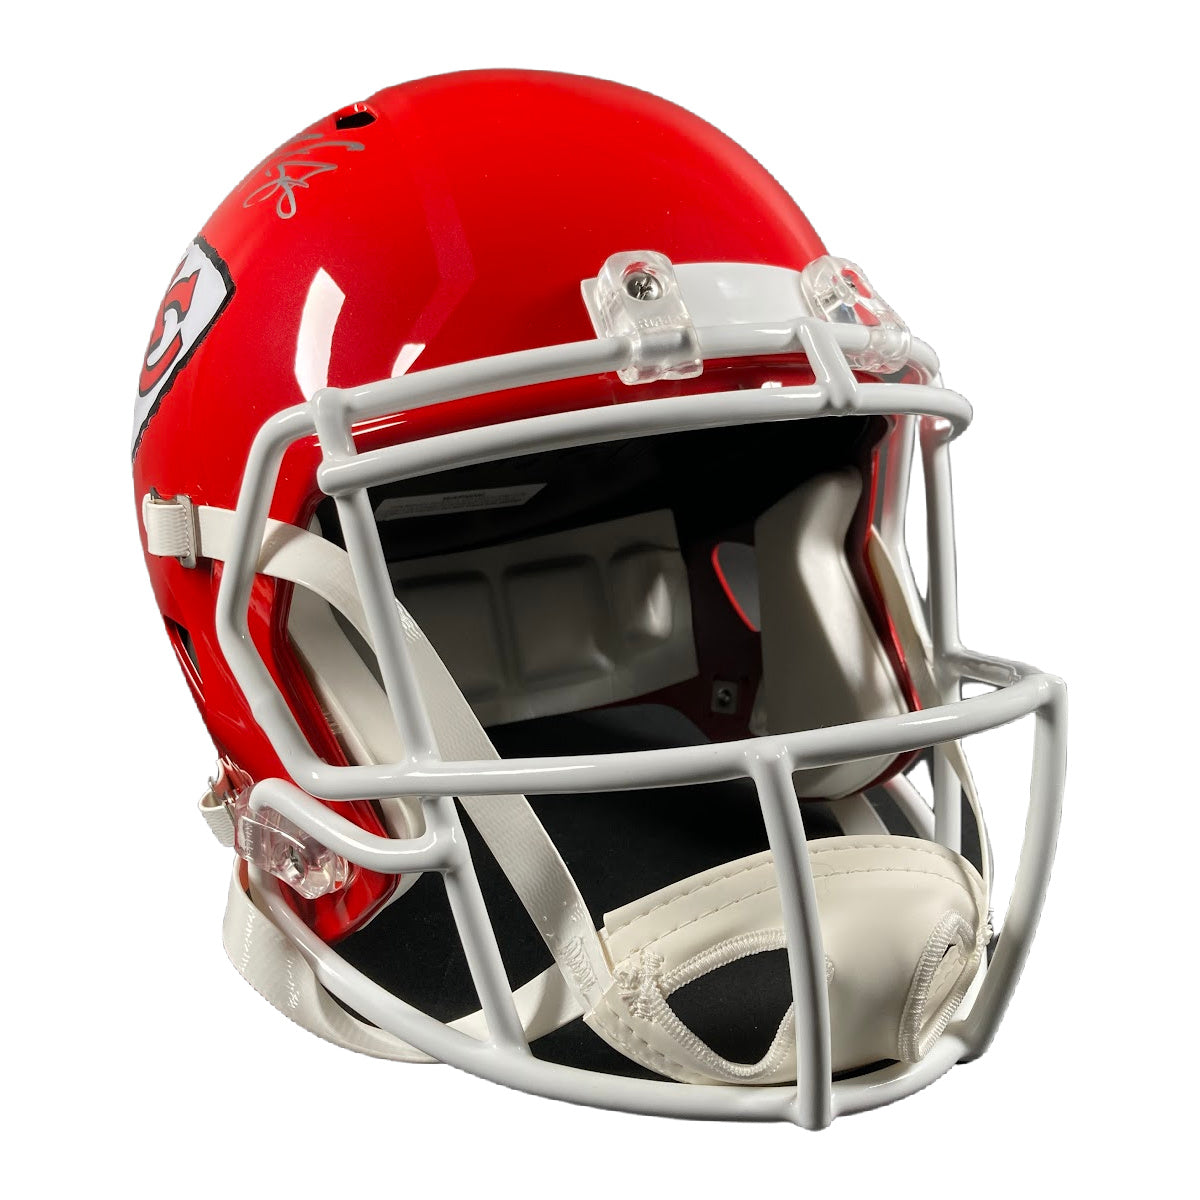 Travis Kelce Autographed Kansas City Chiefs F/S Full Helmet Rep Signed BAS